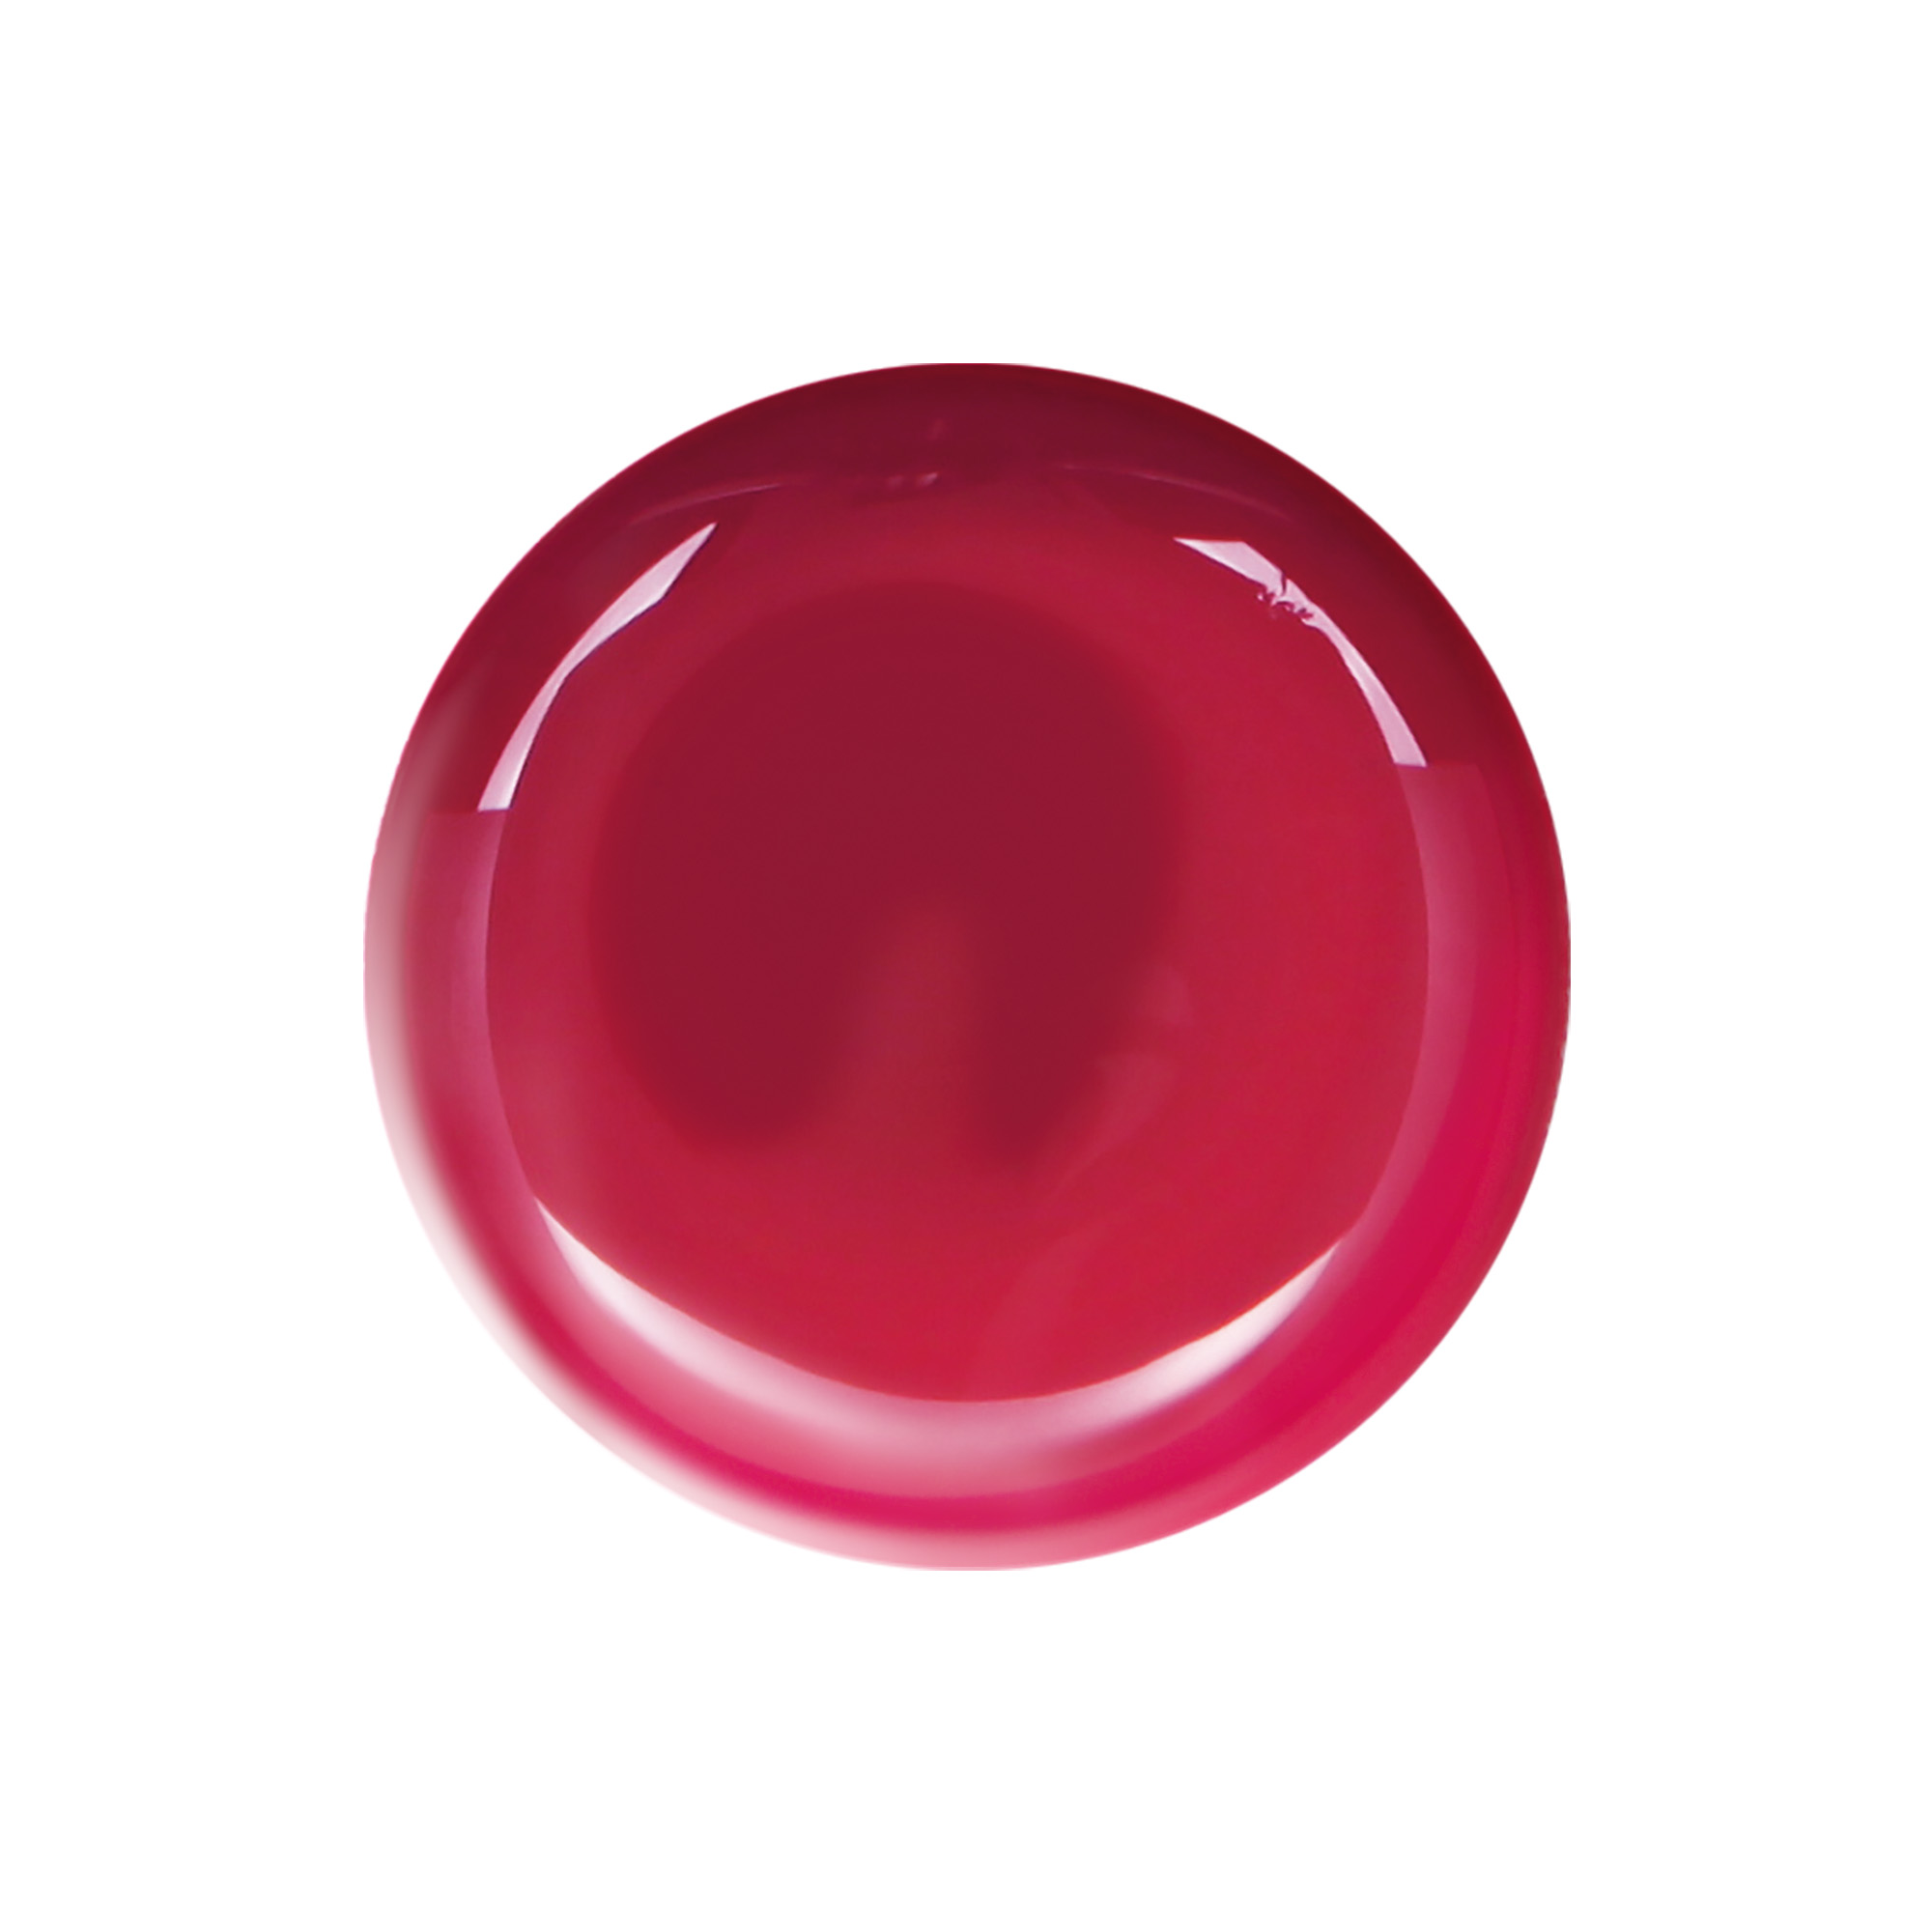 Vernis à ongles semi-permanent rouge carmin Glam Treasure 10 ml Laqerìs TNS